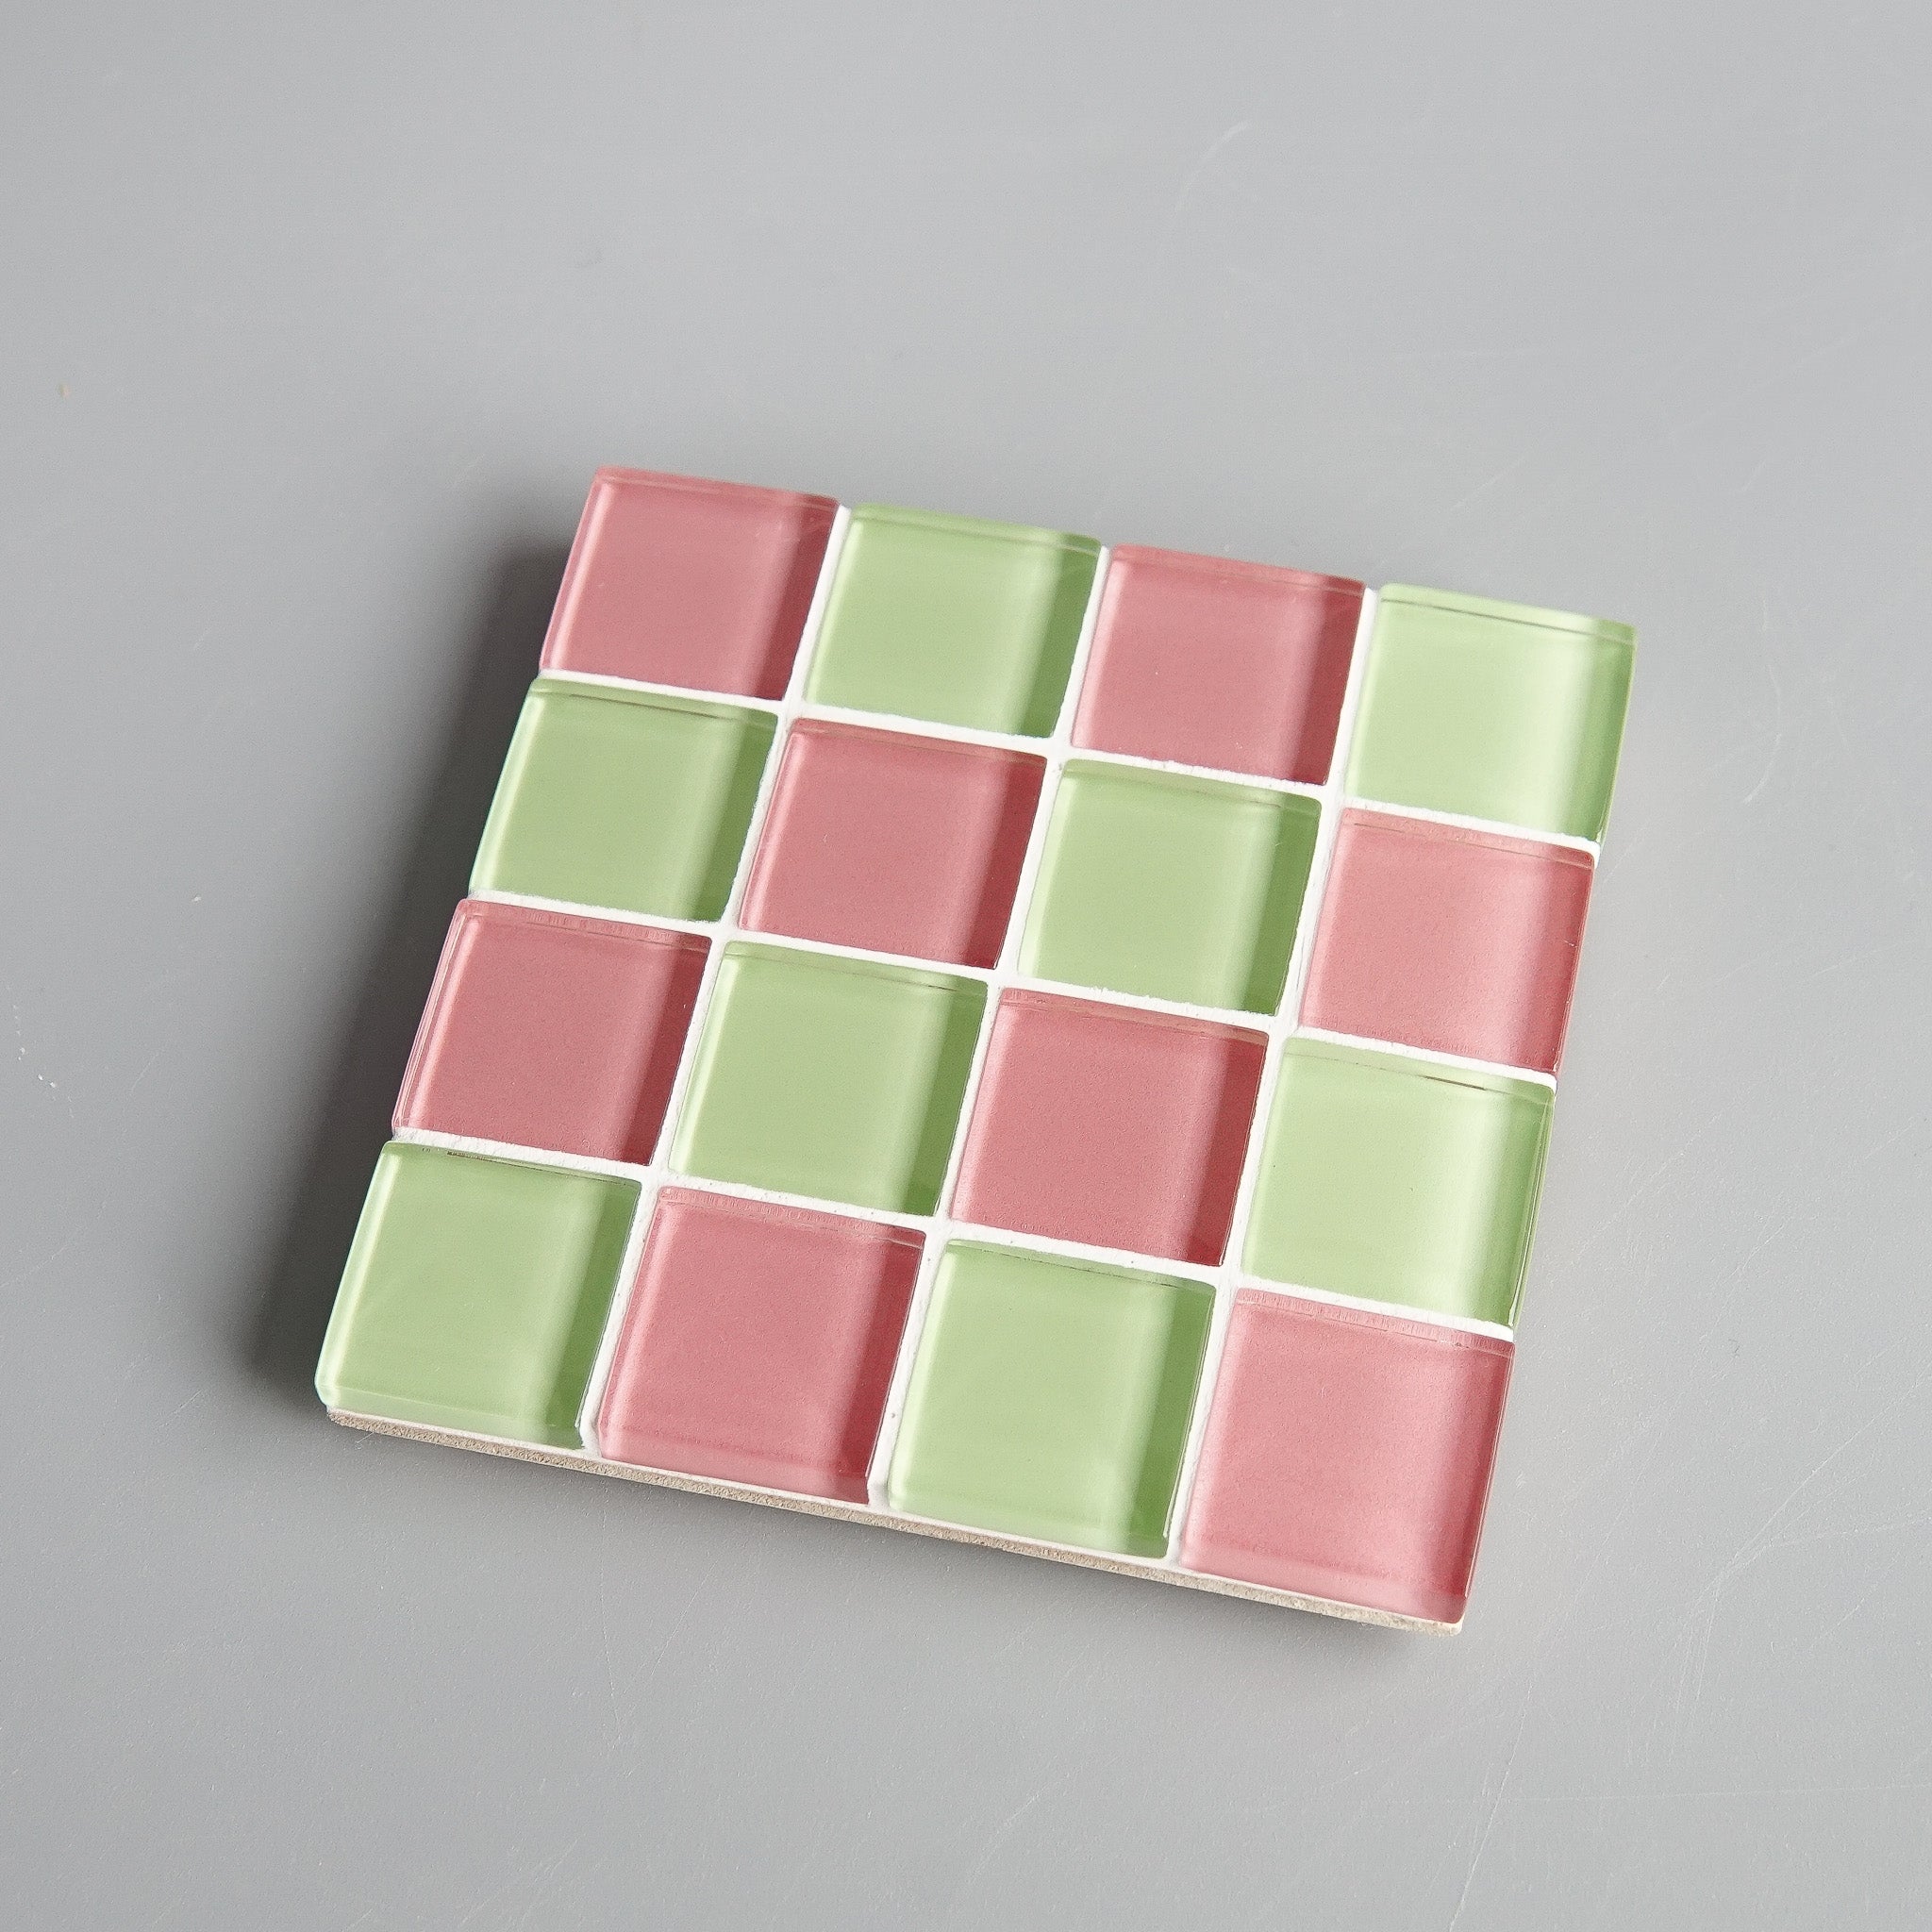 Subtle Art Studios: Glass Tile Coaster in Pink Guava